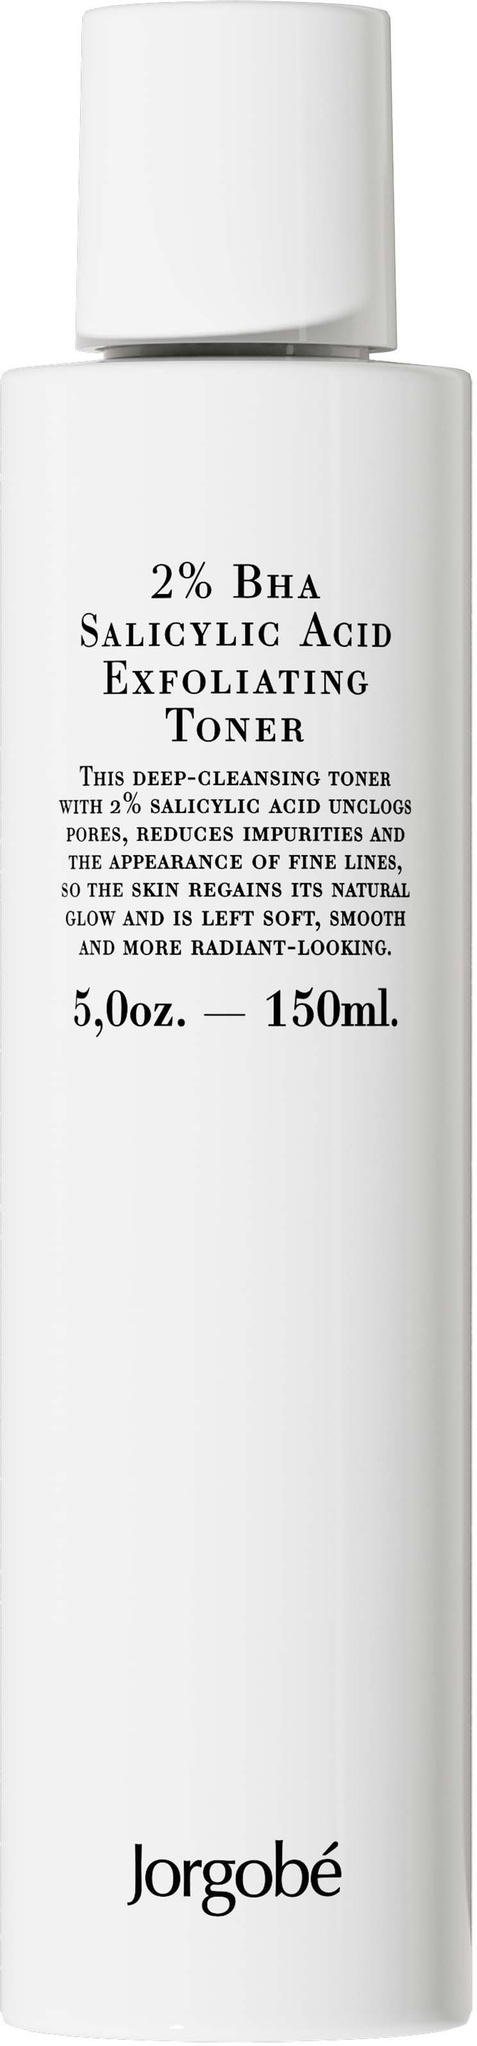 JorgObé 2% BHA Salicylic Acid Exfoliating Toner